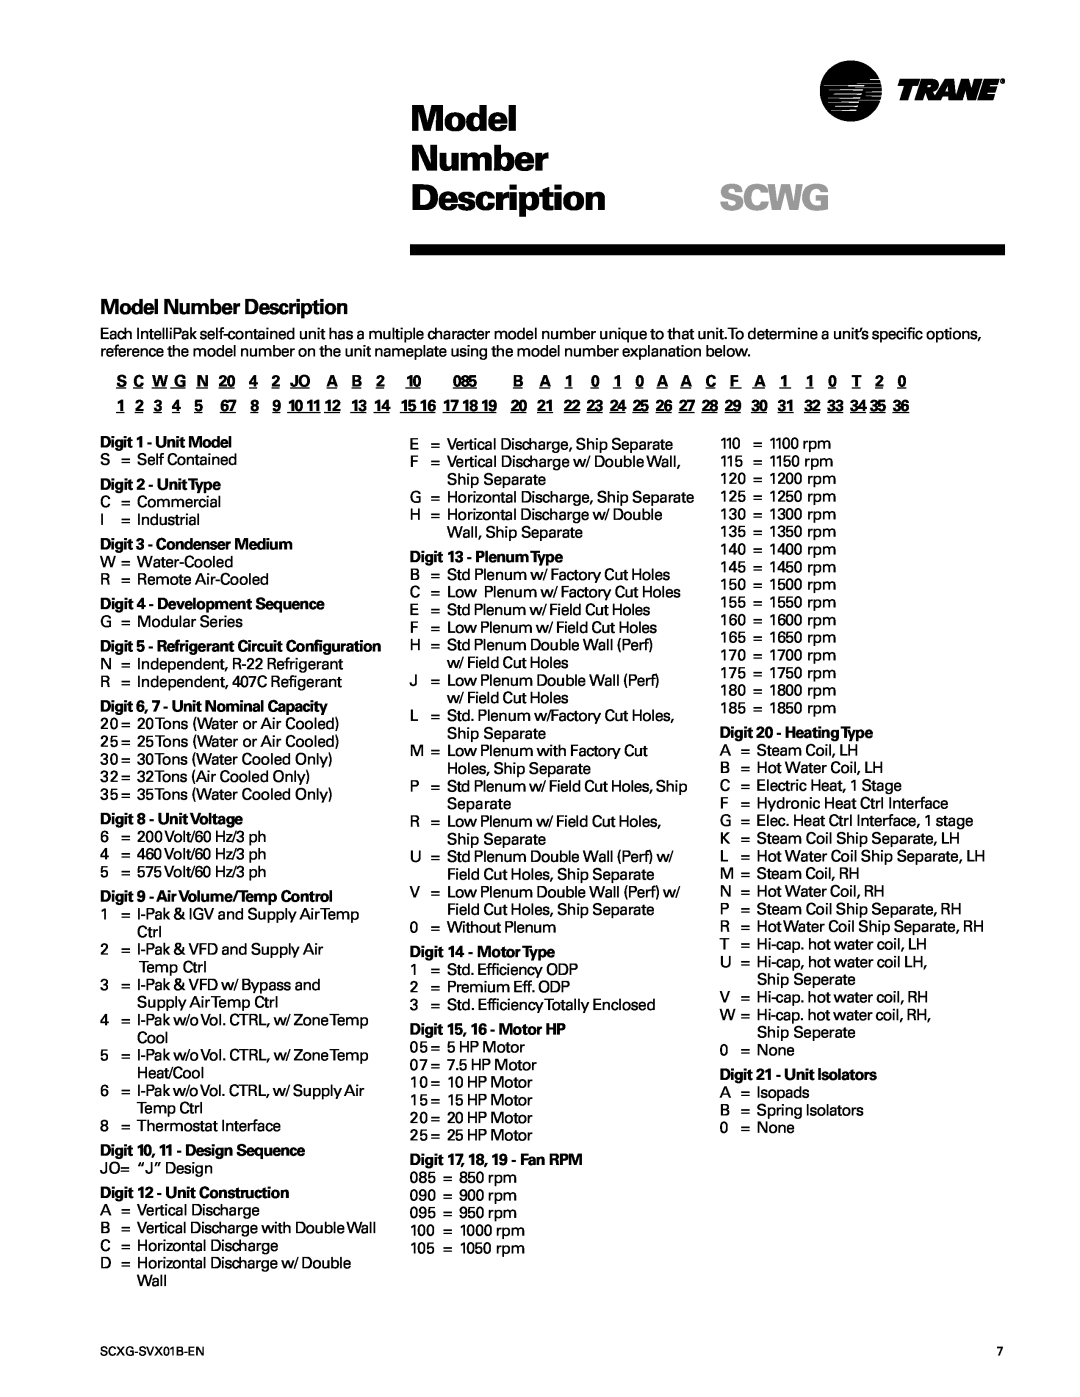 Trane SCXG-SVX01B-EN manual Model Number Description SCWG, W G N, Jo A, 1 0 1 0 A A C F, 1 0 T 2, 22 23 24 25 26 27 28 